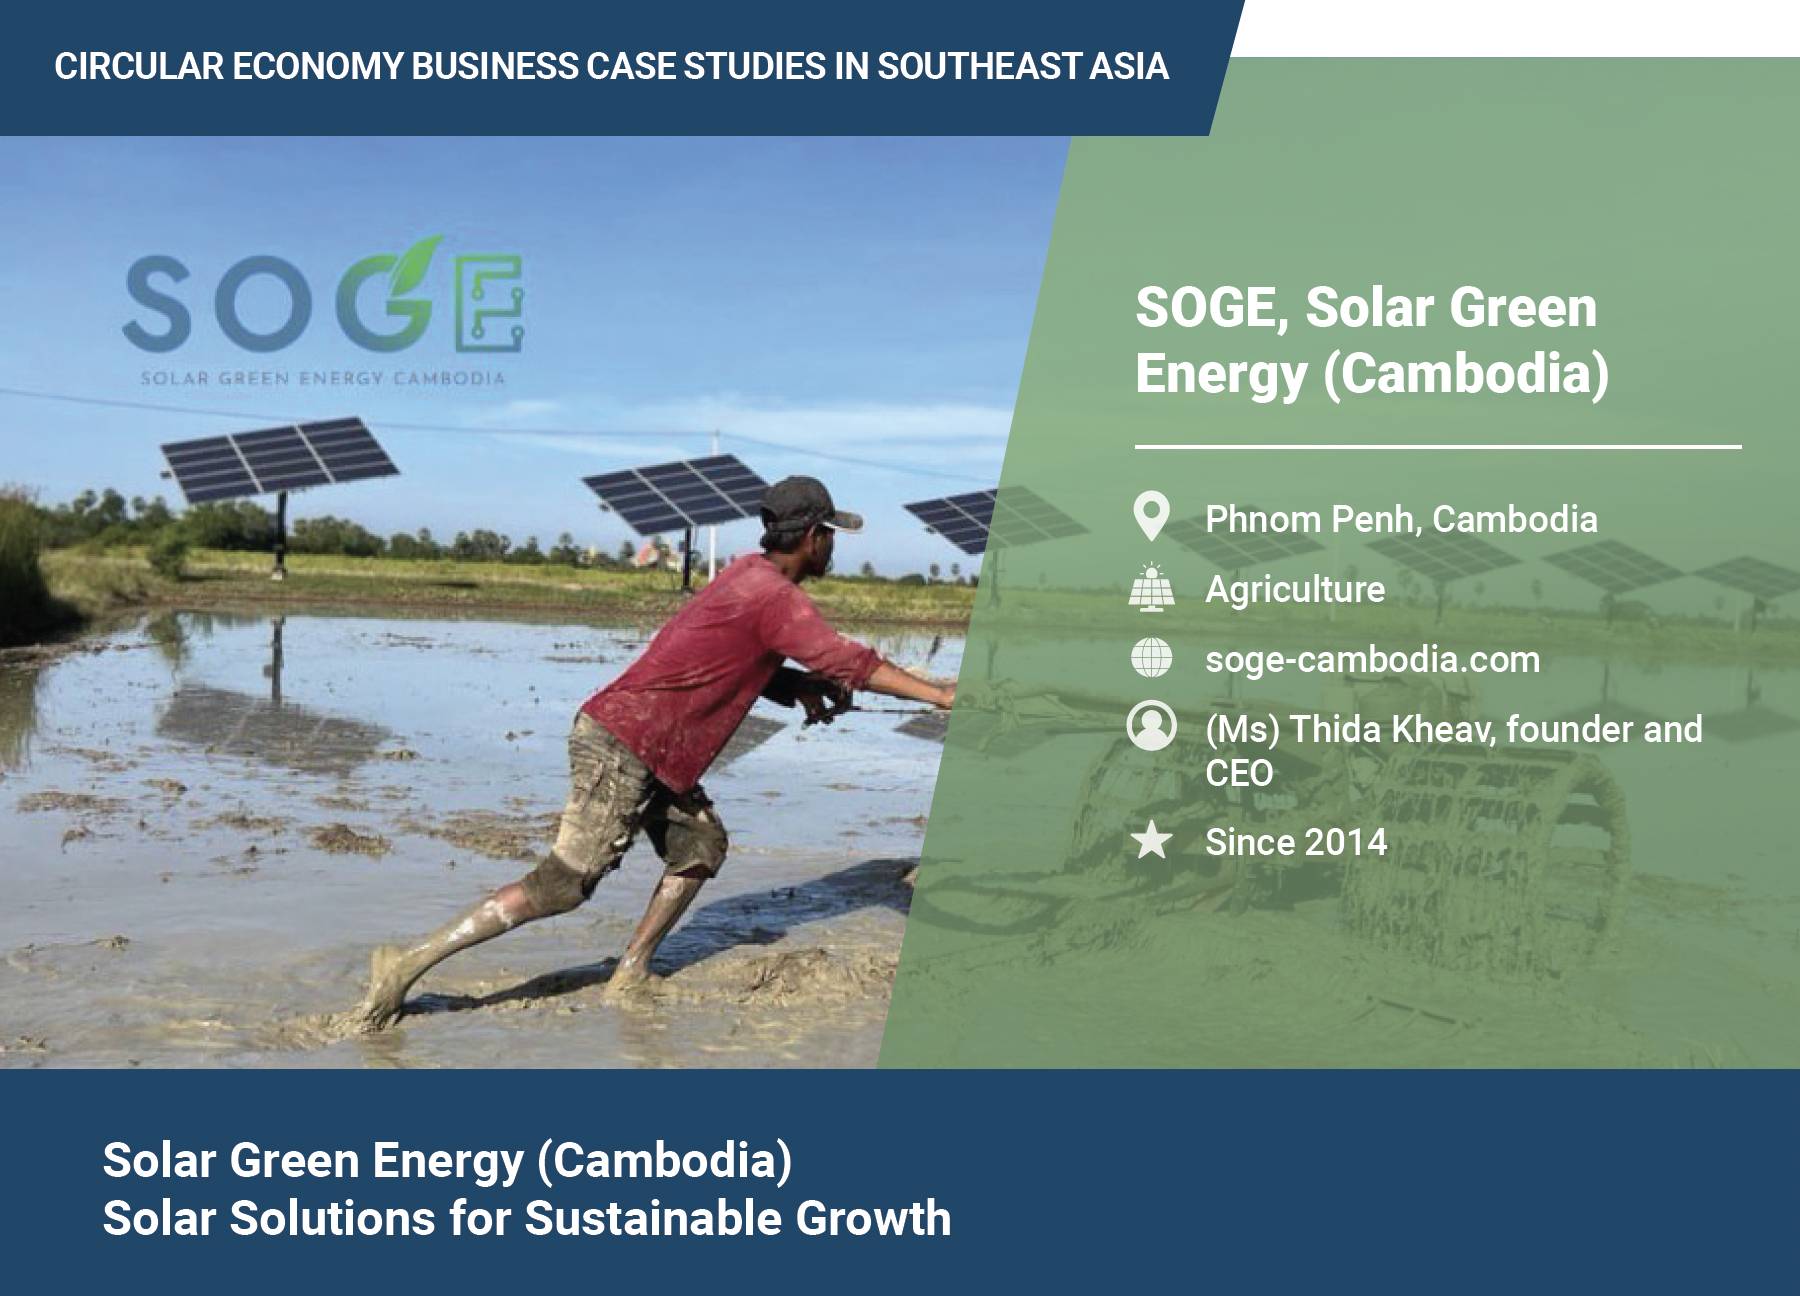 SOGE, Solar Green Energy (Cambodia)4040